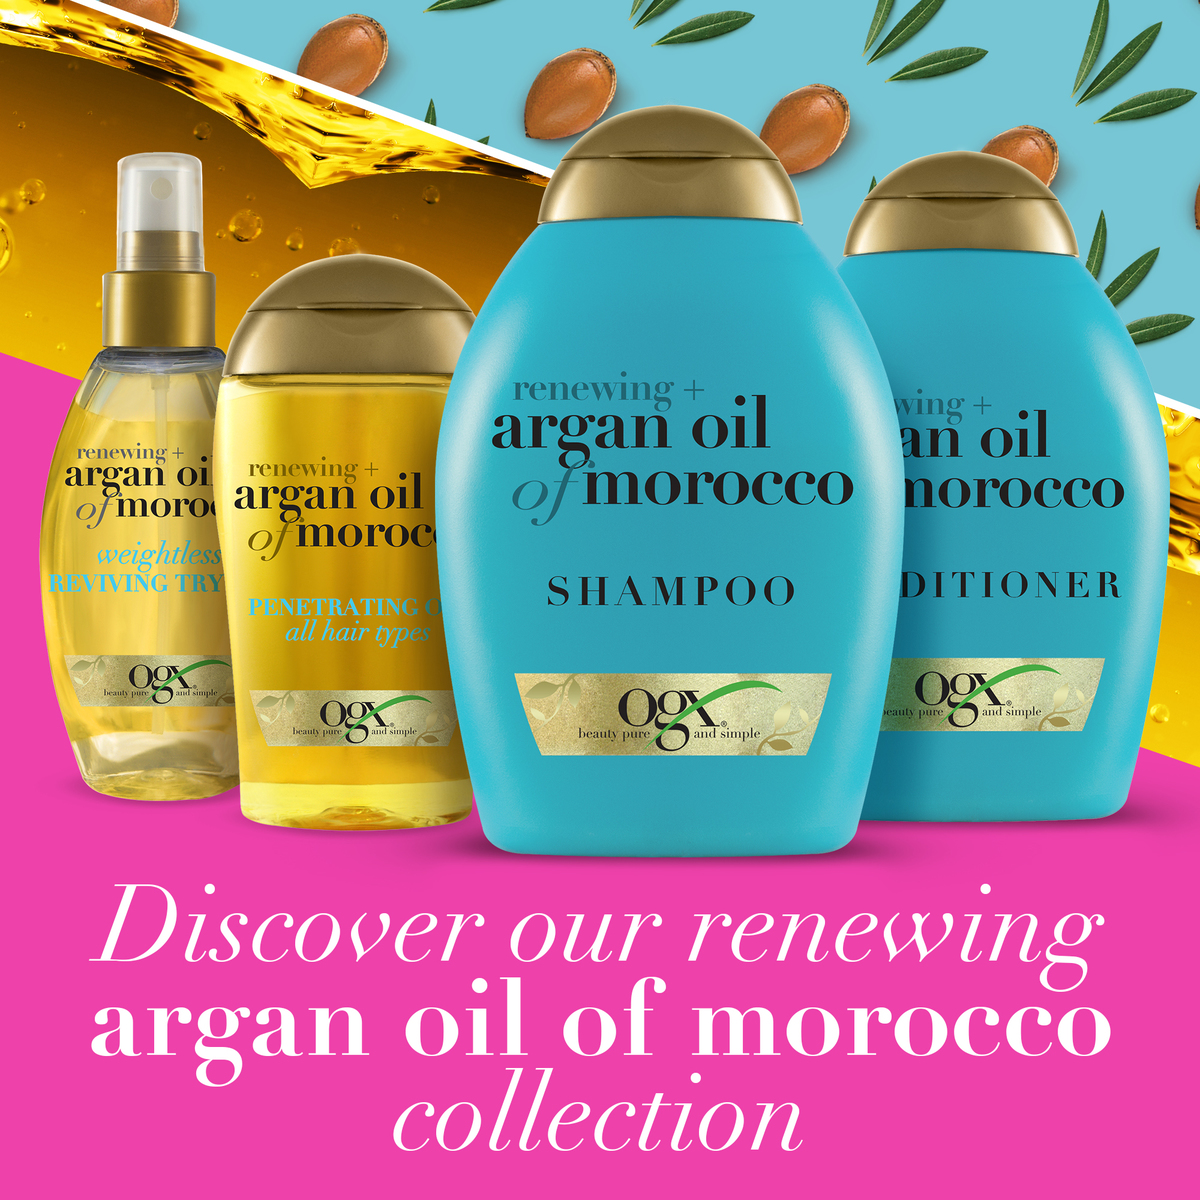 Ogx Hair Oil Renewing + Argan Oil Penetrating Oil 100 ml